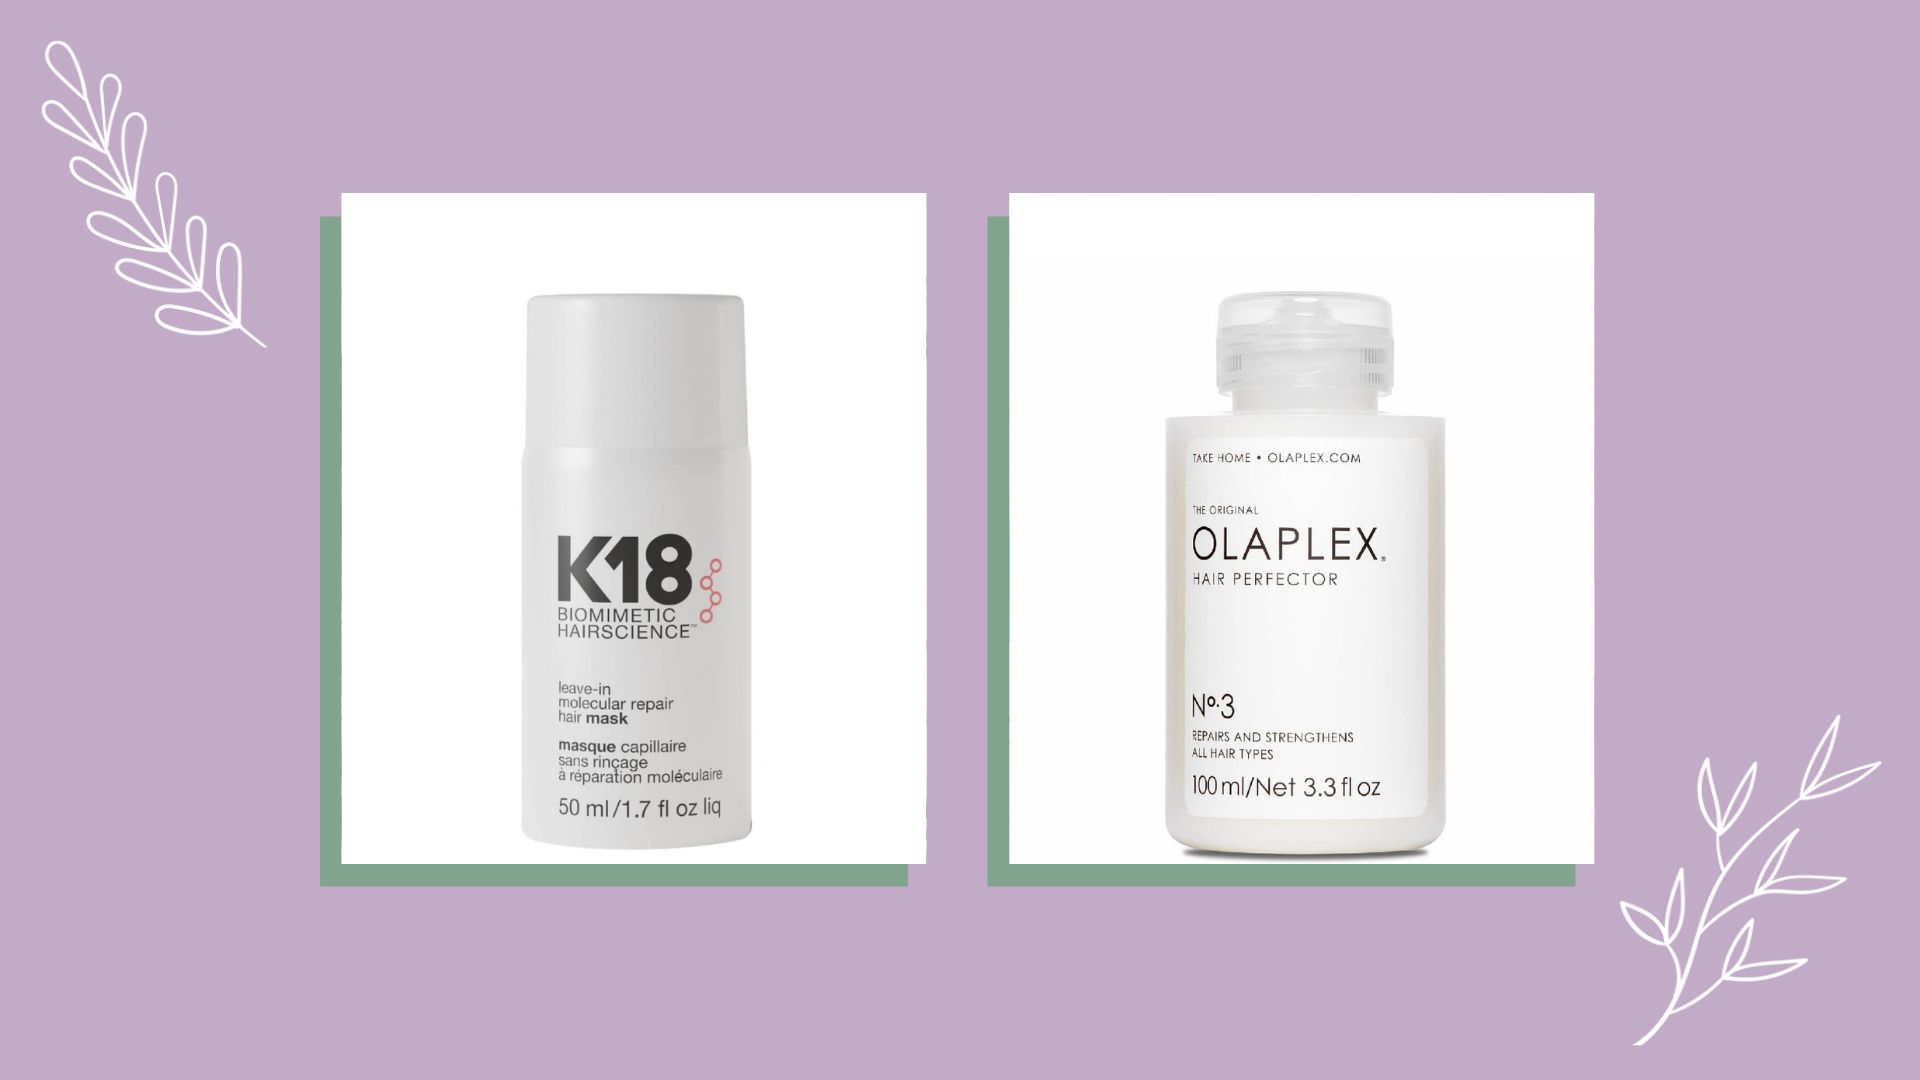 K18 vs Olaplex: which hair treatment is better?